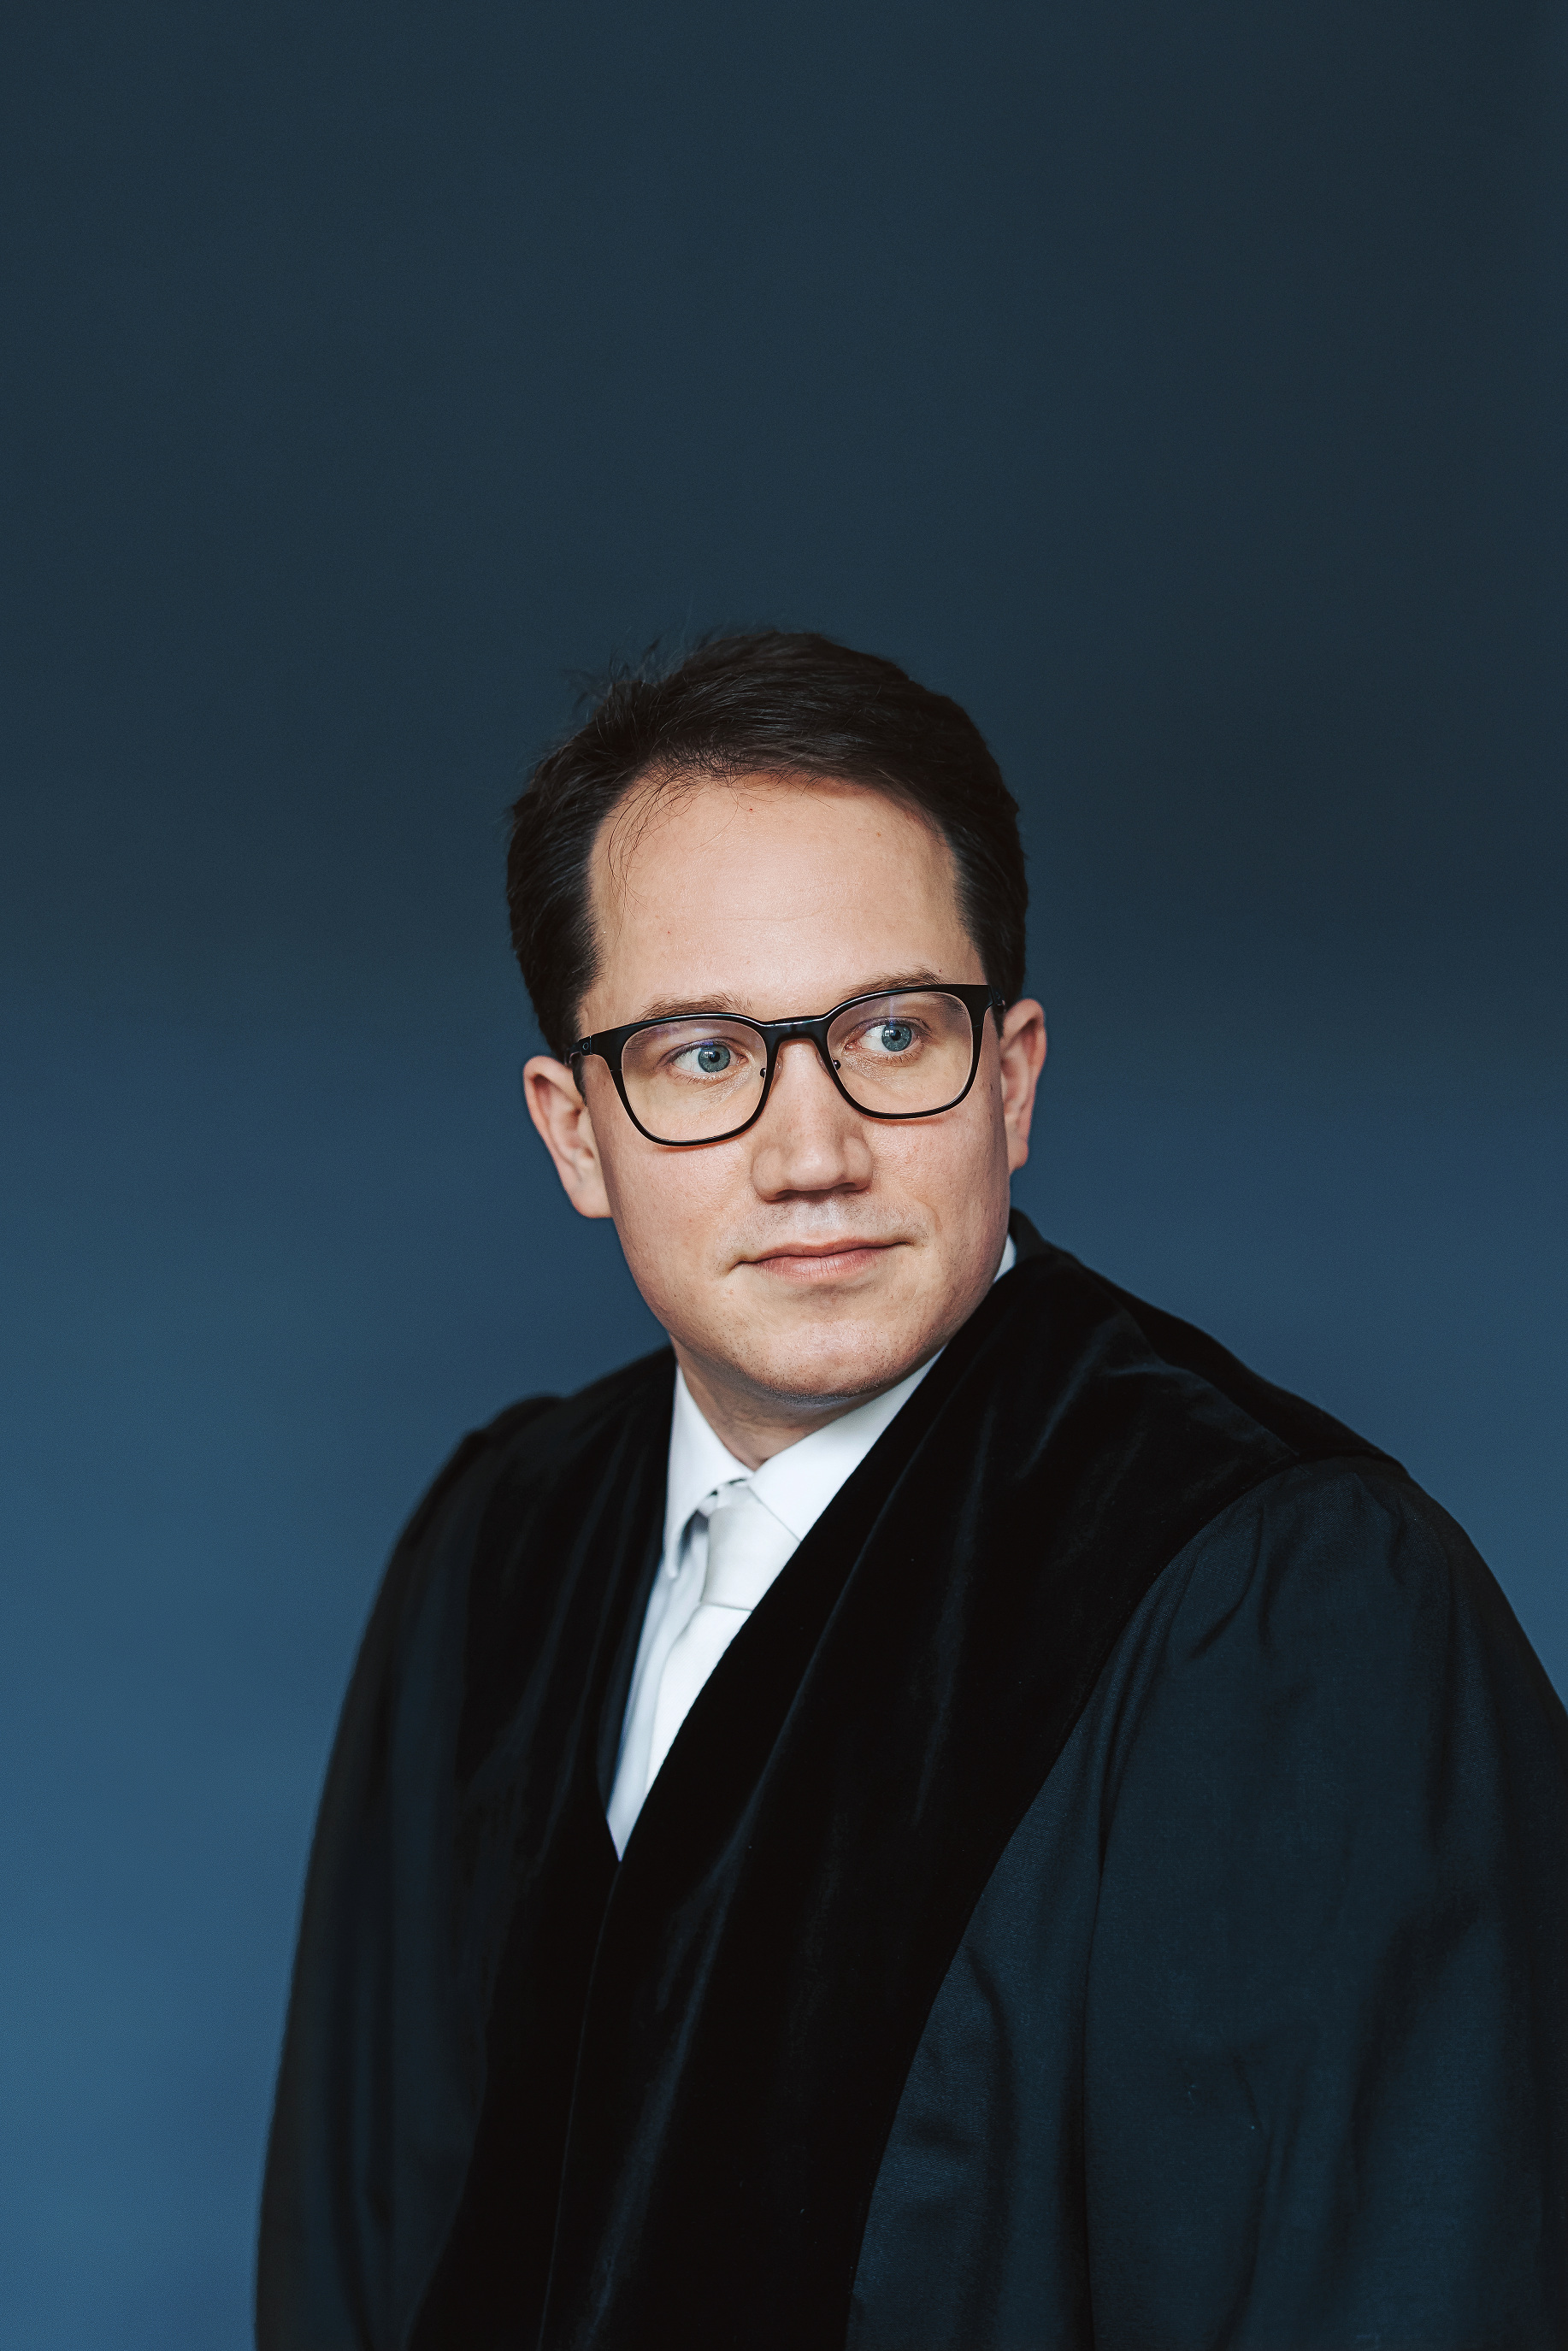 Portraitfoto von Staatsanwalt Sebastian Ibing in Robe